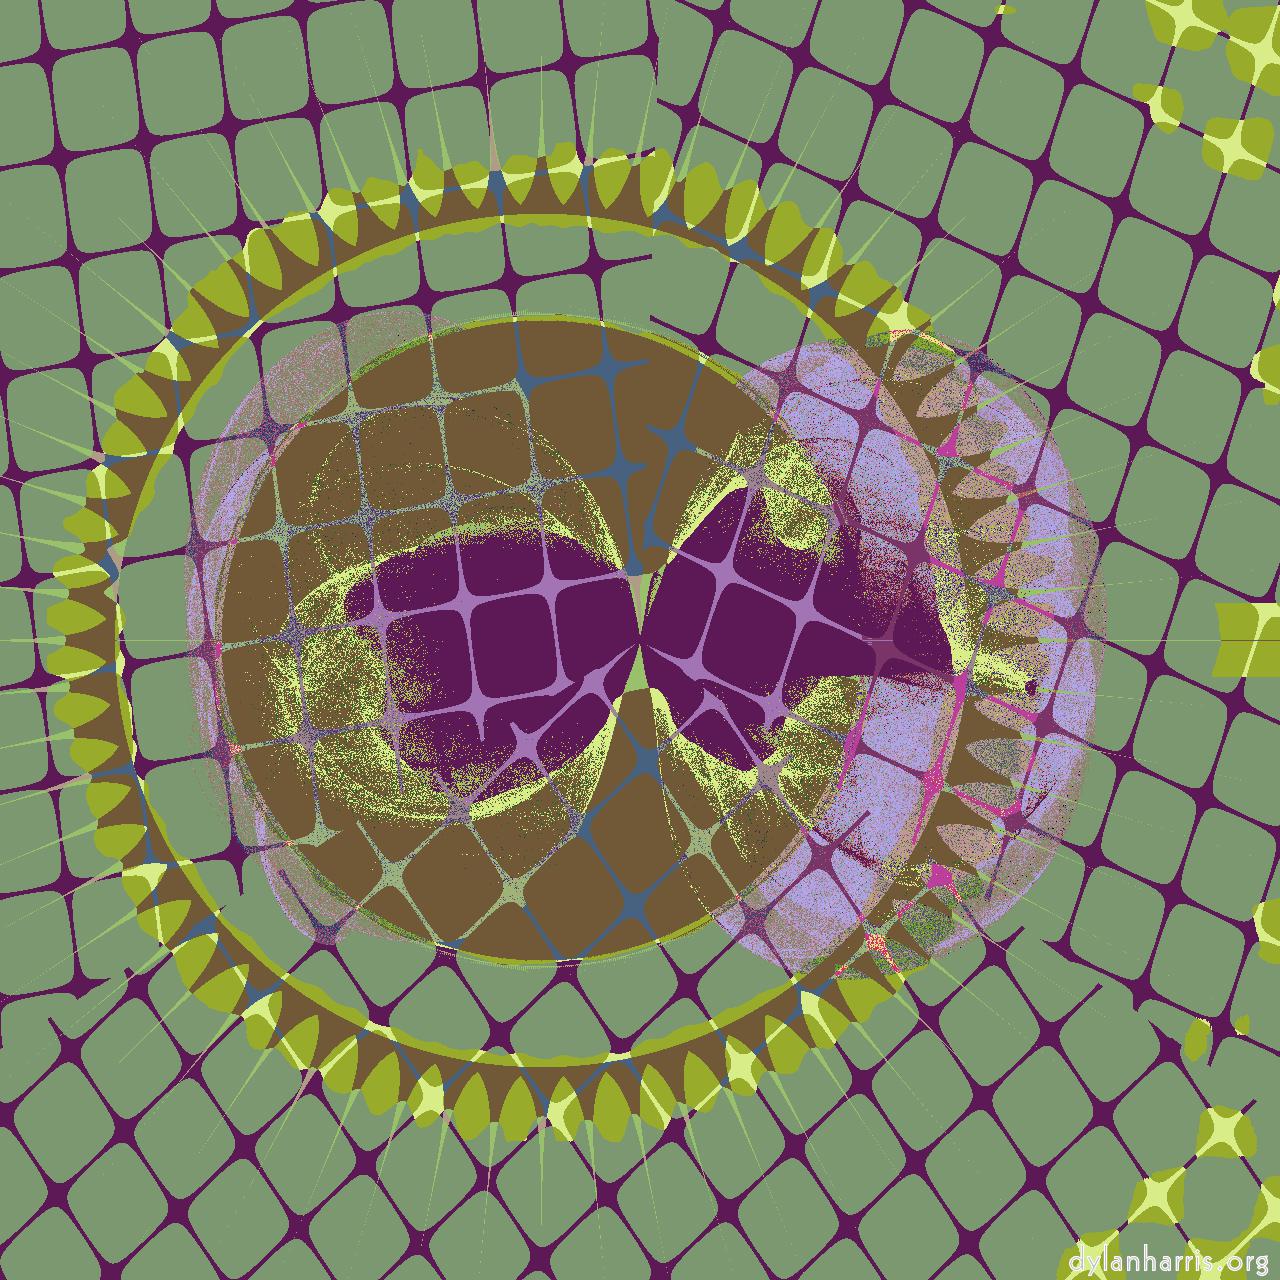 image: variations :: attractor grid 2